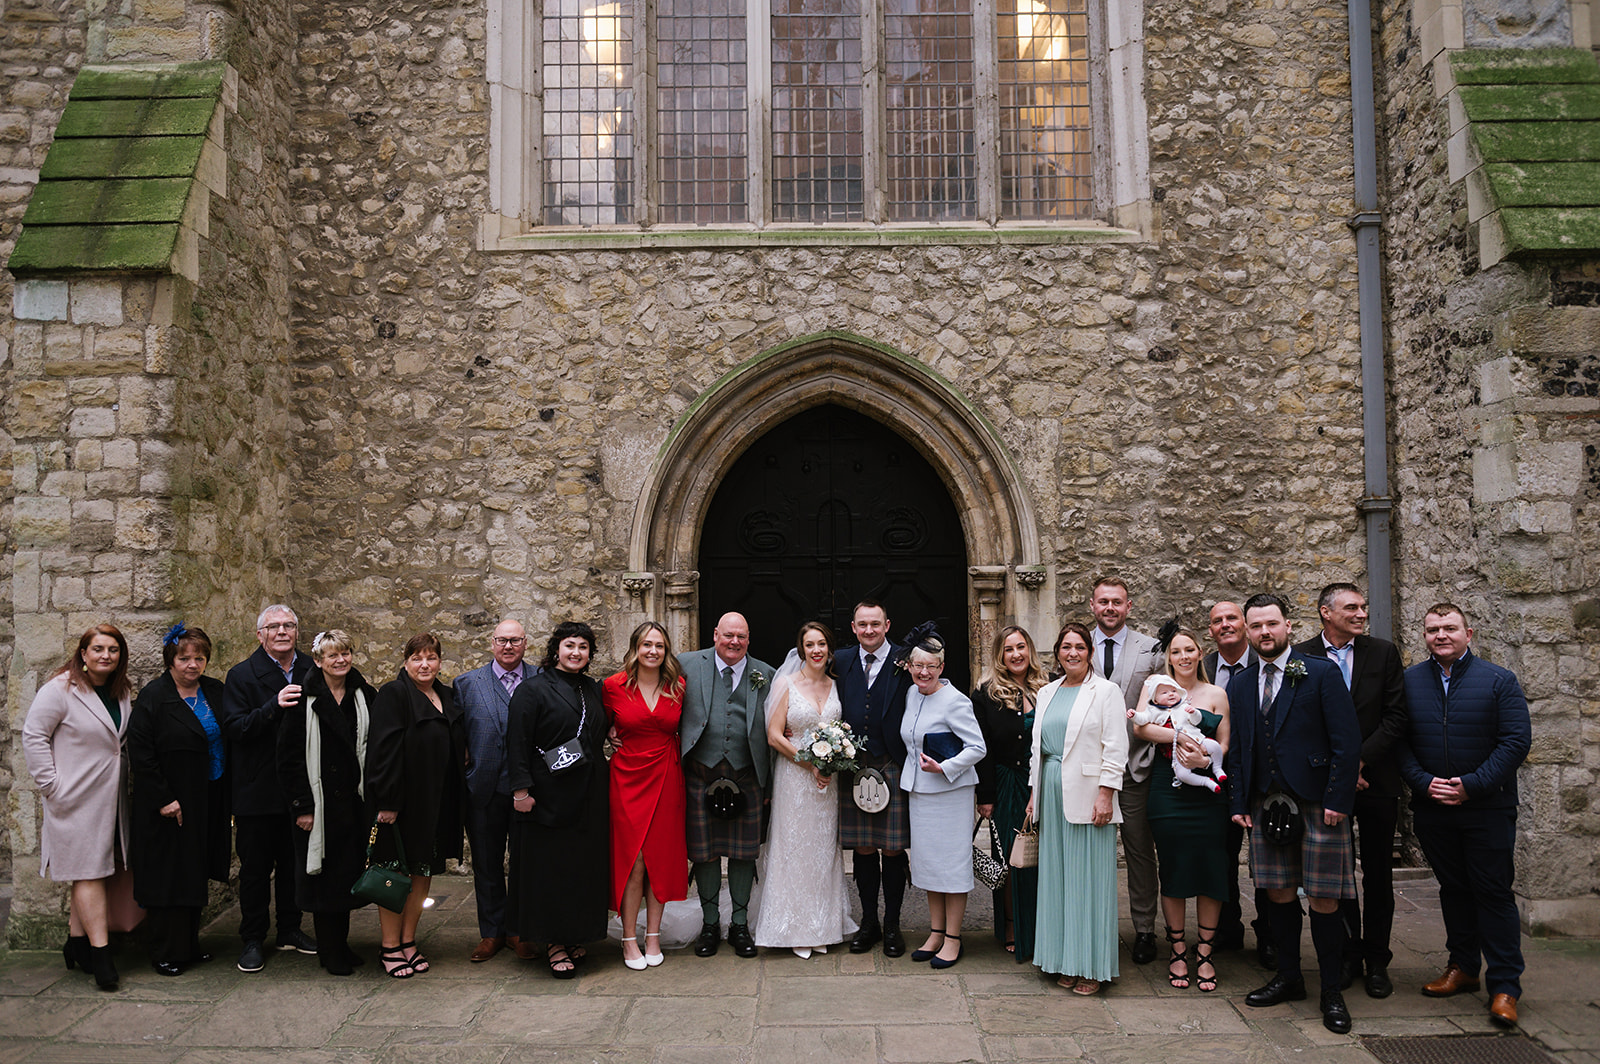 wedding group photos at St Helen's Church Bishopsgate after their wedding